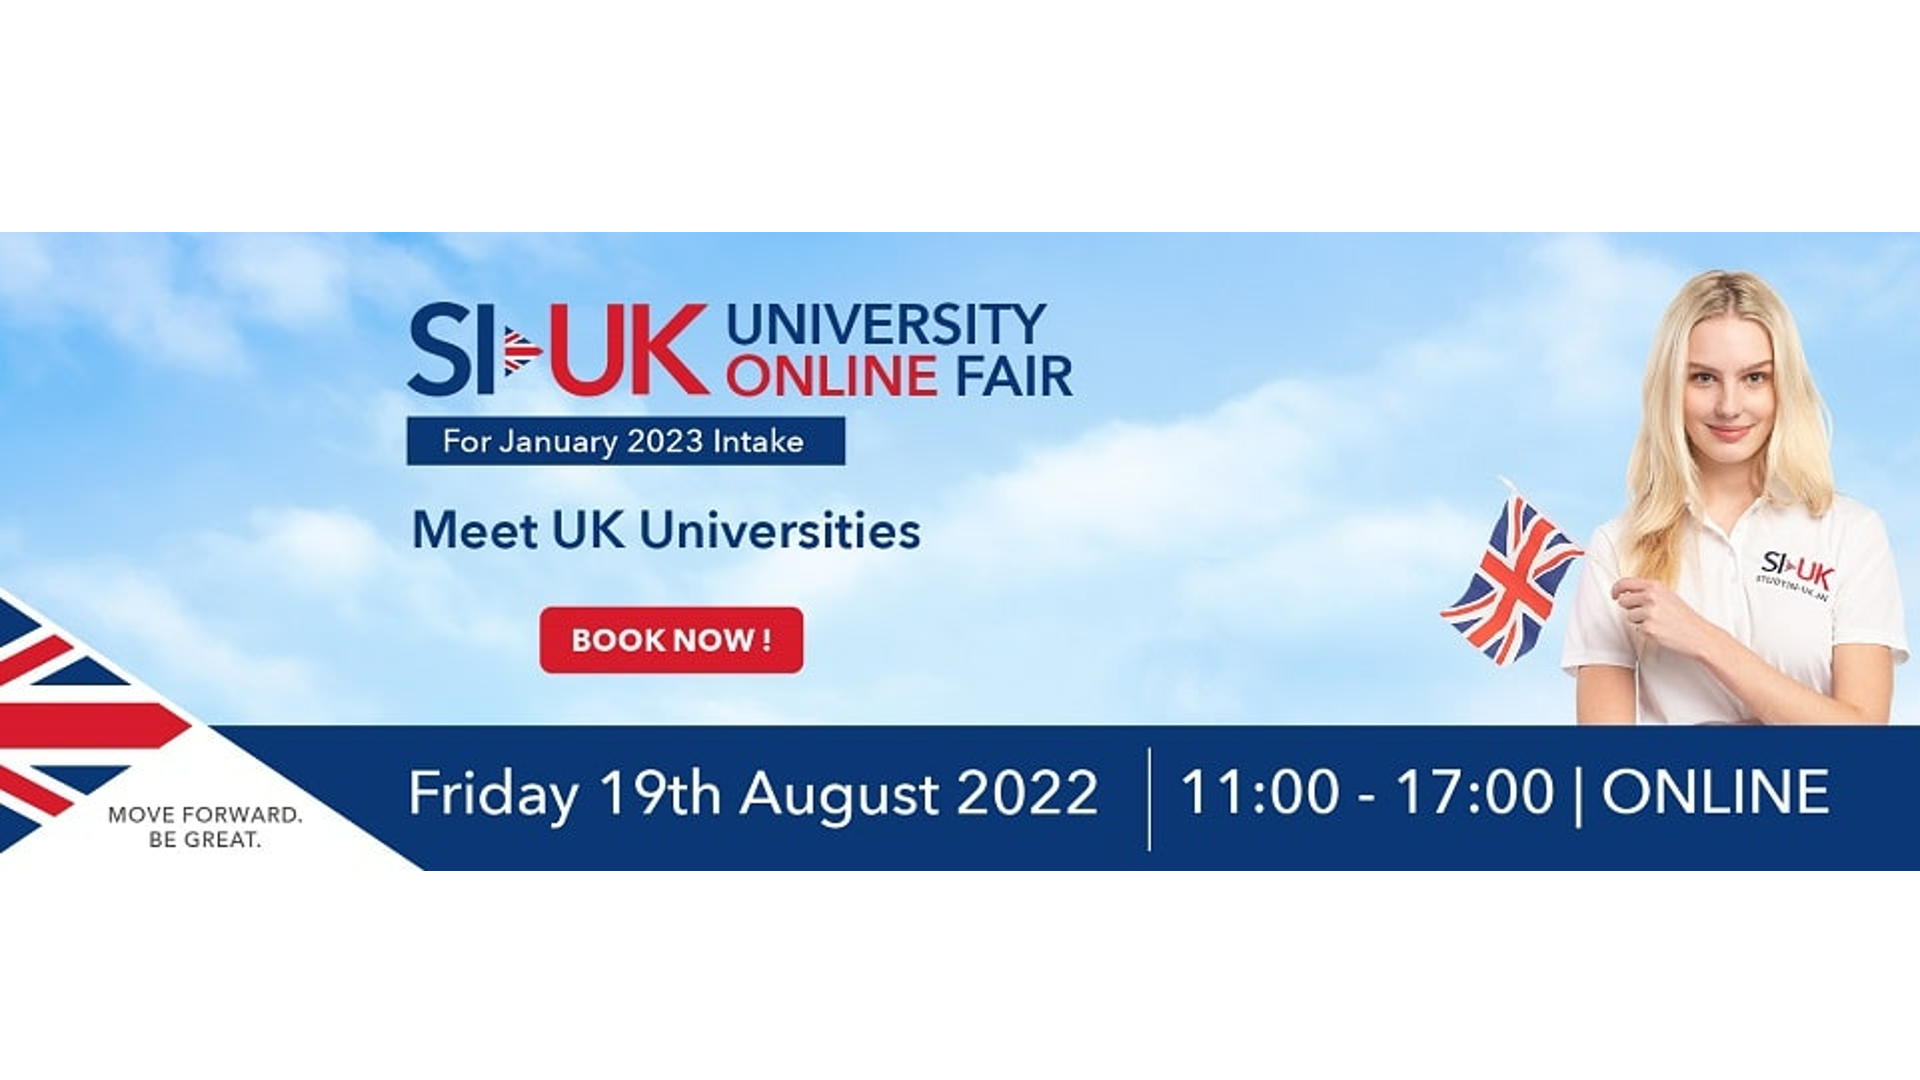 SI-UK University Fair Jaipur 2022, Online Event